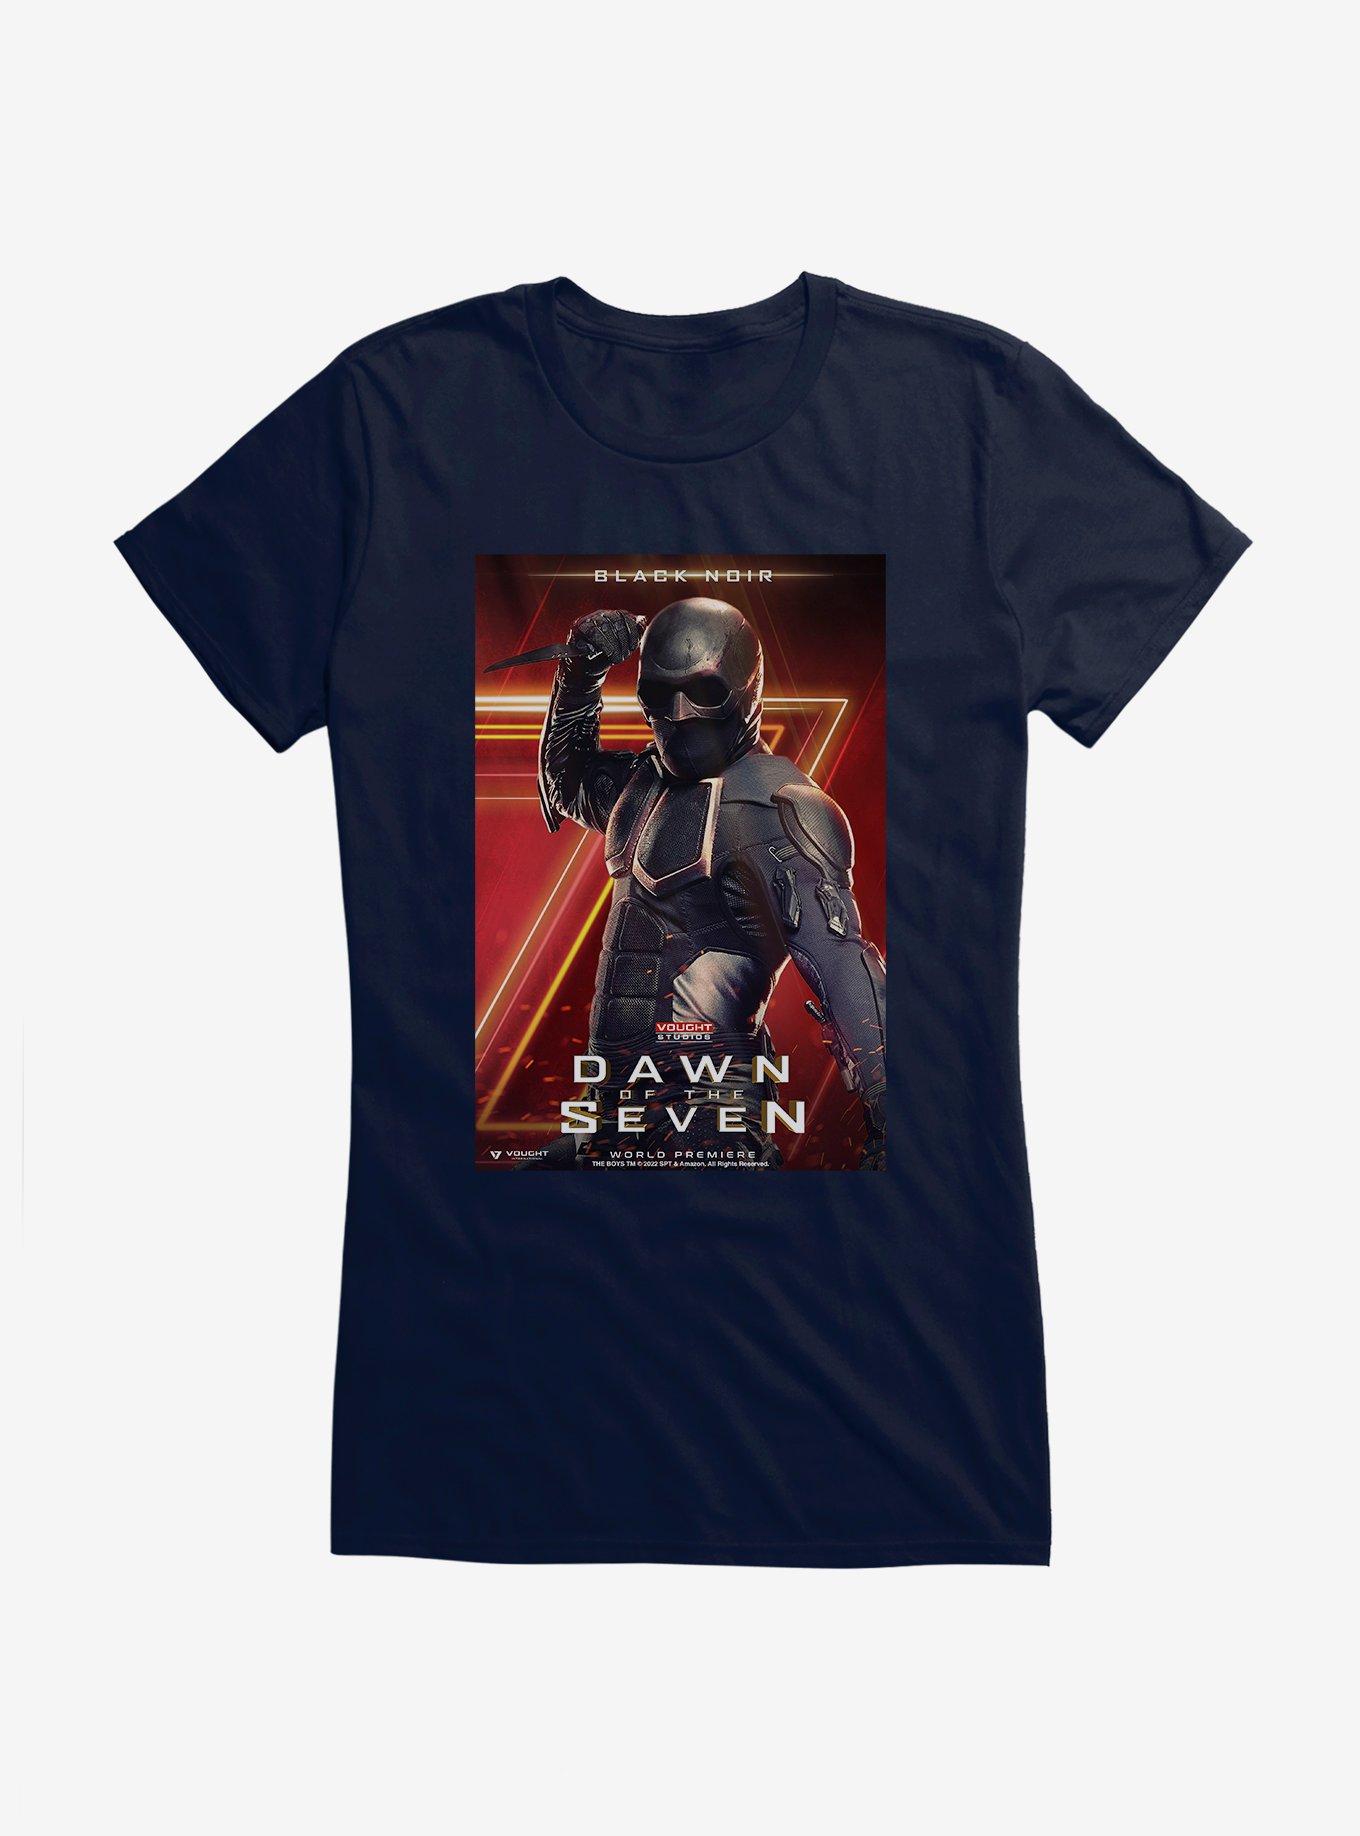 The Boys Dawn Of Seven Black Noir Movie Poster Girls T-Shirt